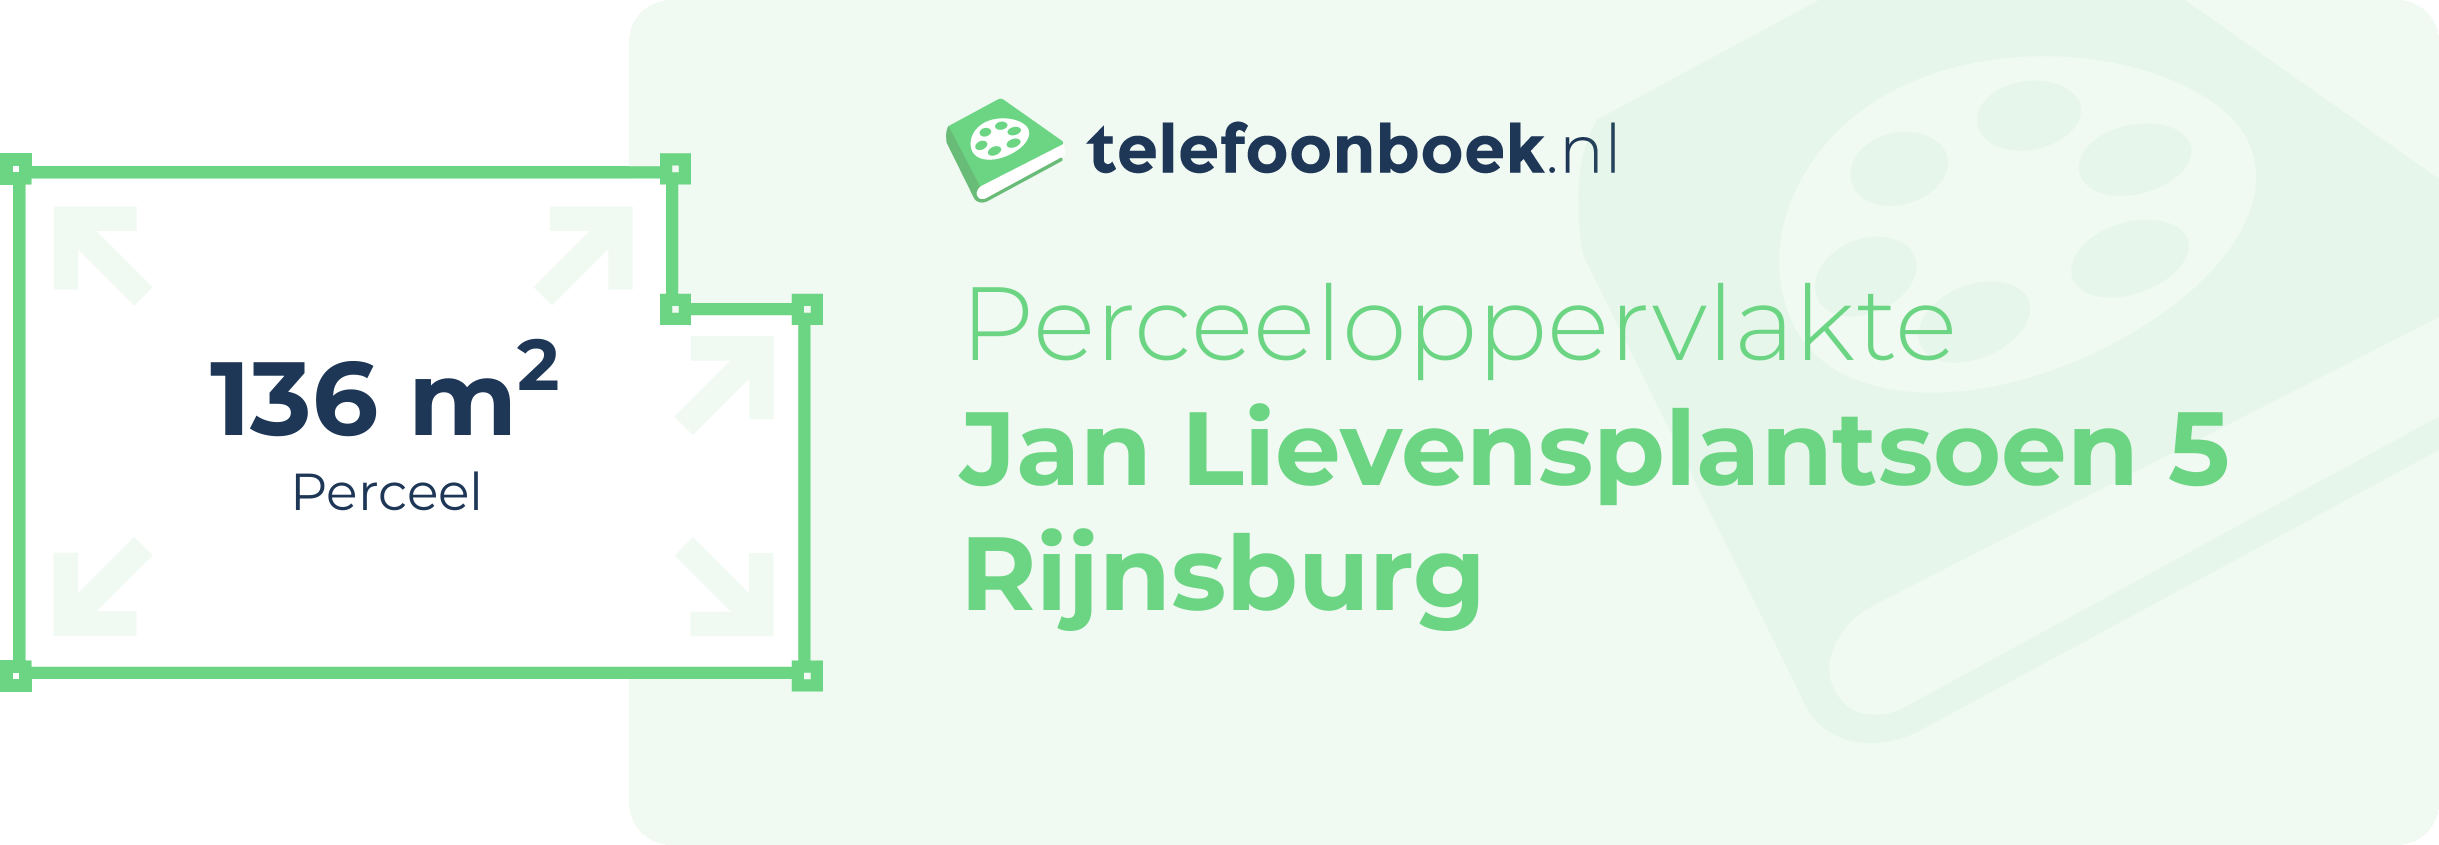 Perceeloppervlakte Jan Lievensplantsoen 5 Rijnsburg